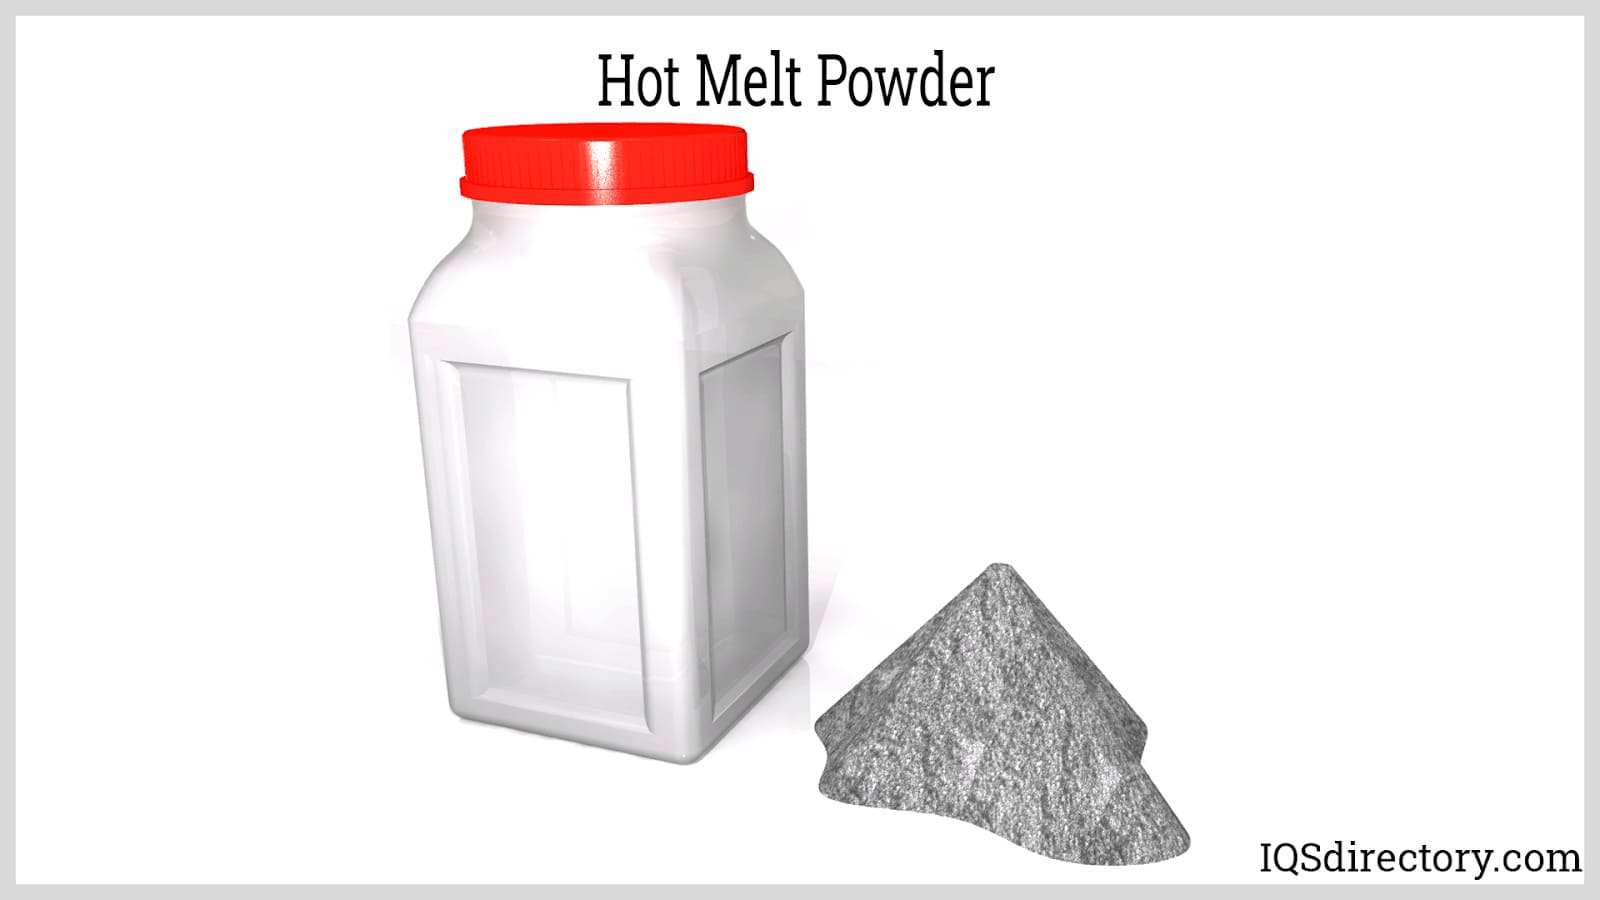 Hot Melt Powder